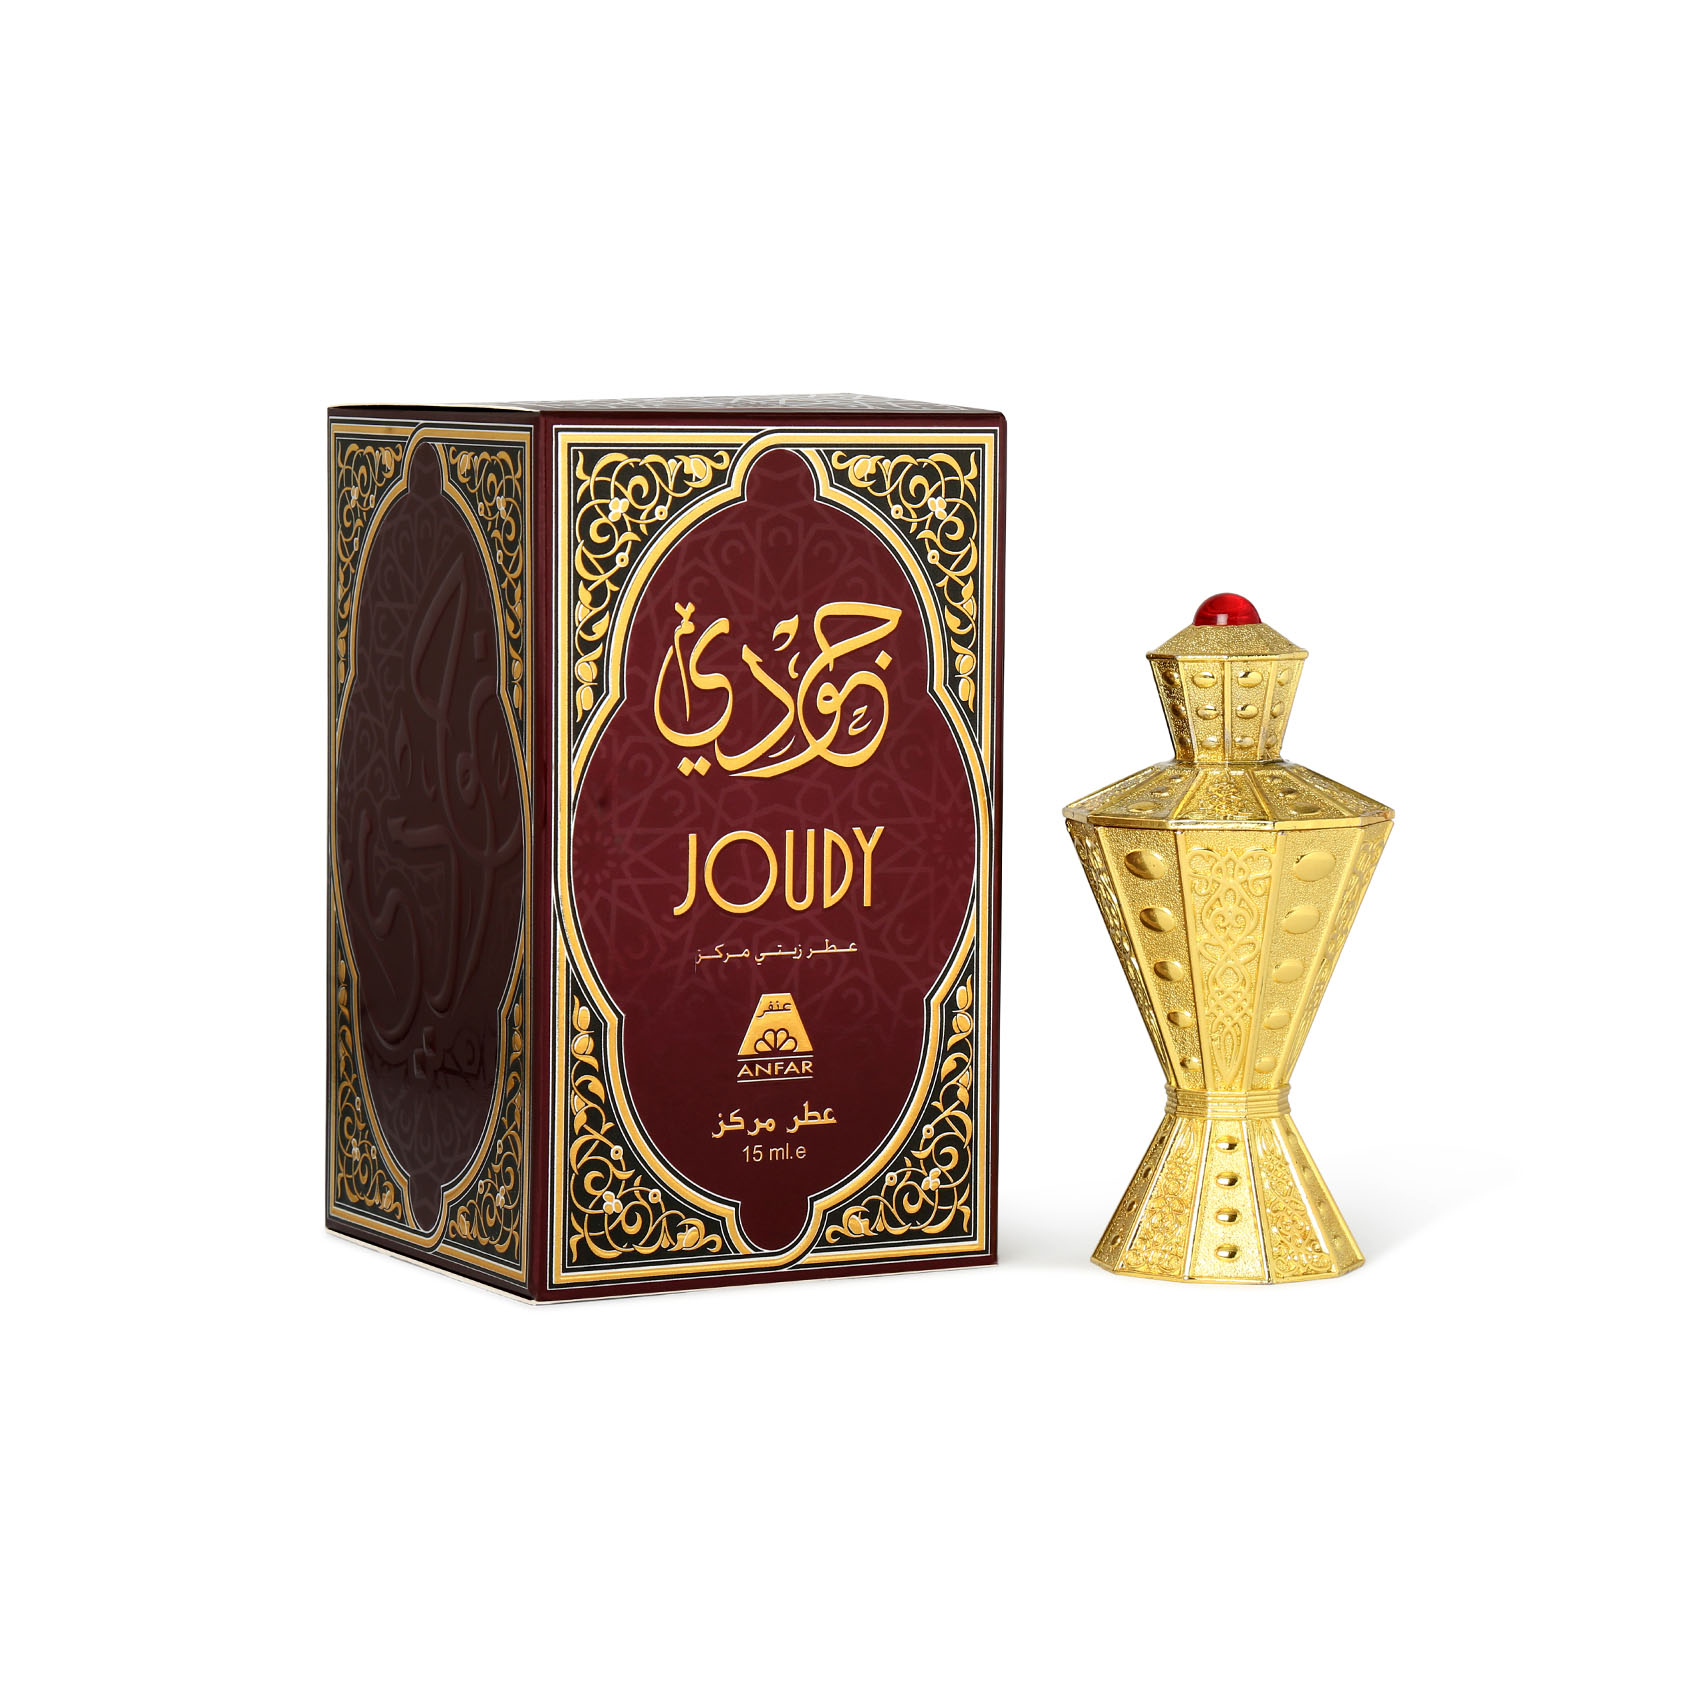 Joudy Cp 15 ml Perfume For Men & Women By Anfar